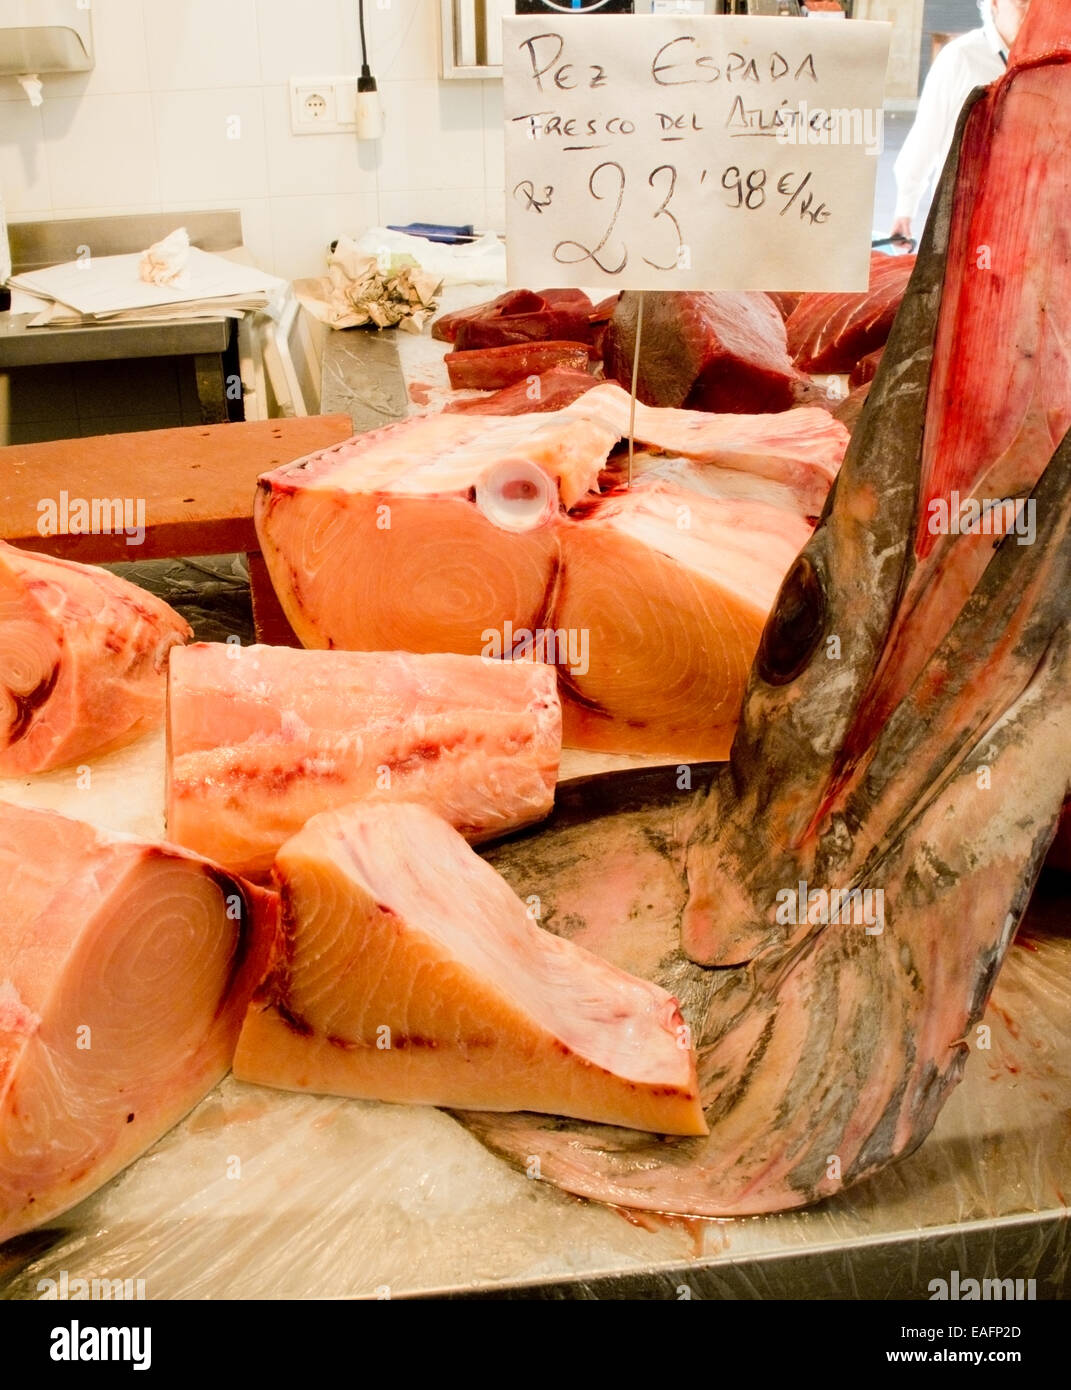 Swordfish pieces in a market. Atlantic swordfish. (Cartel in spanish that says: Swordfish. Fresh Atlantic.) Stock Photo